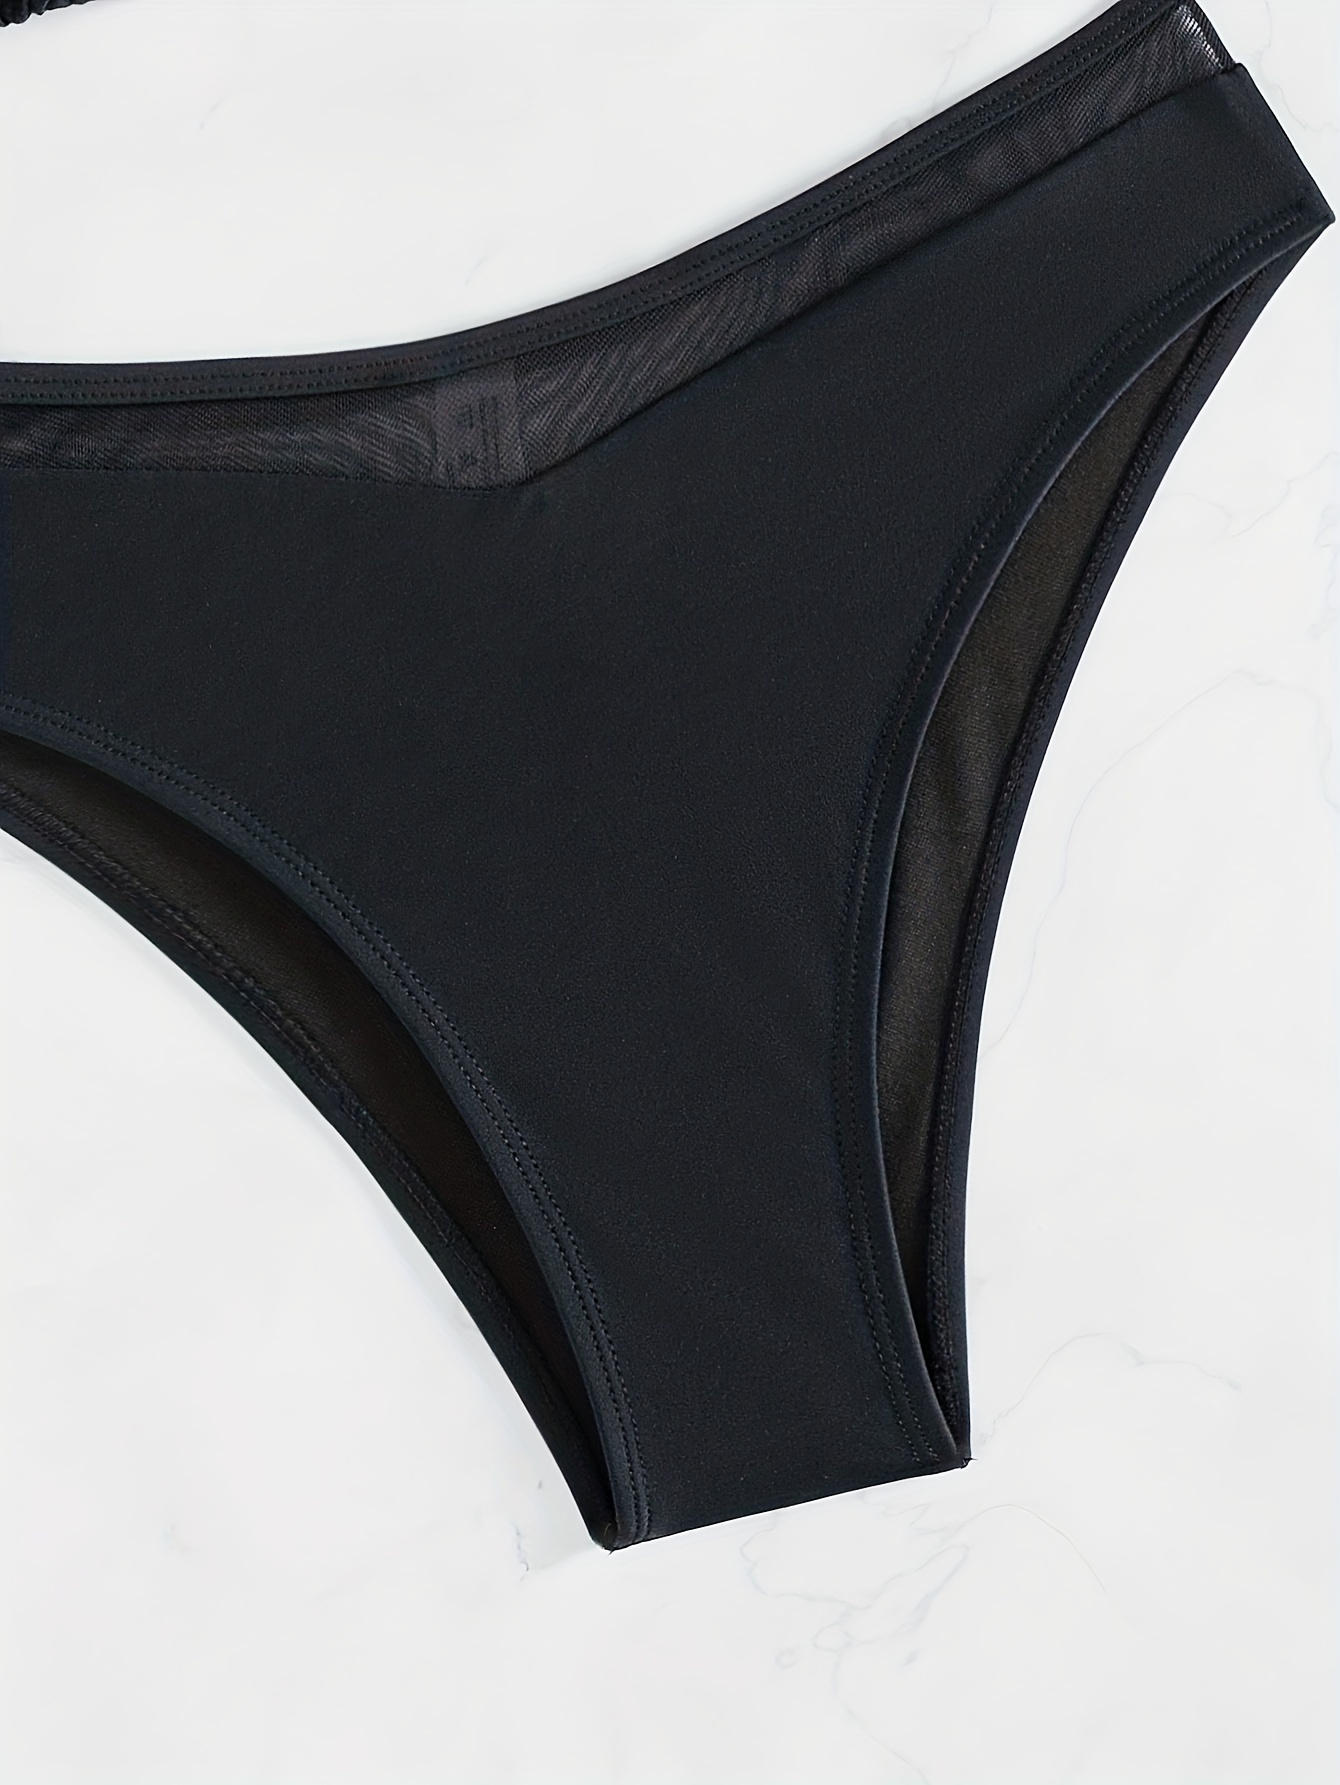 All Black - Black Cotton Triangle Underwear Set, 2 pieces